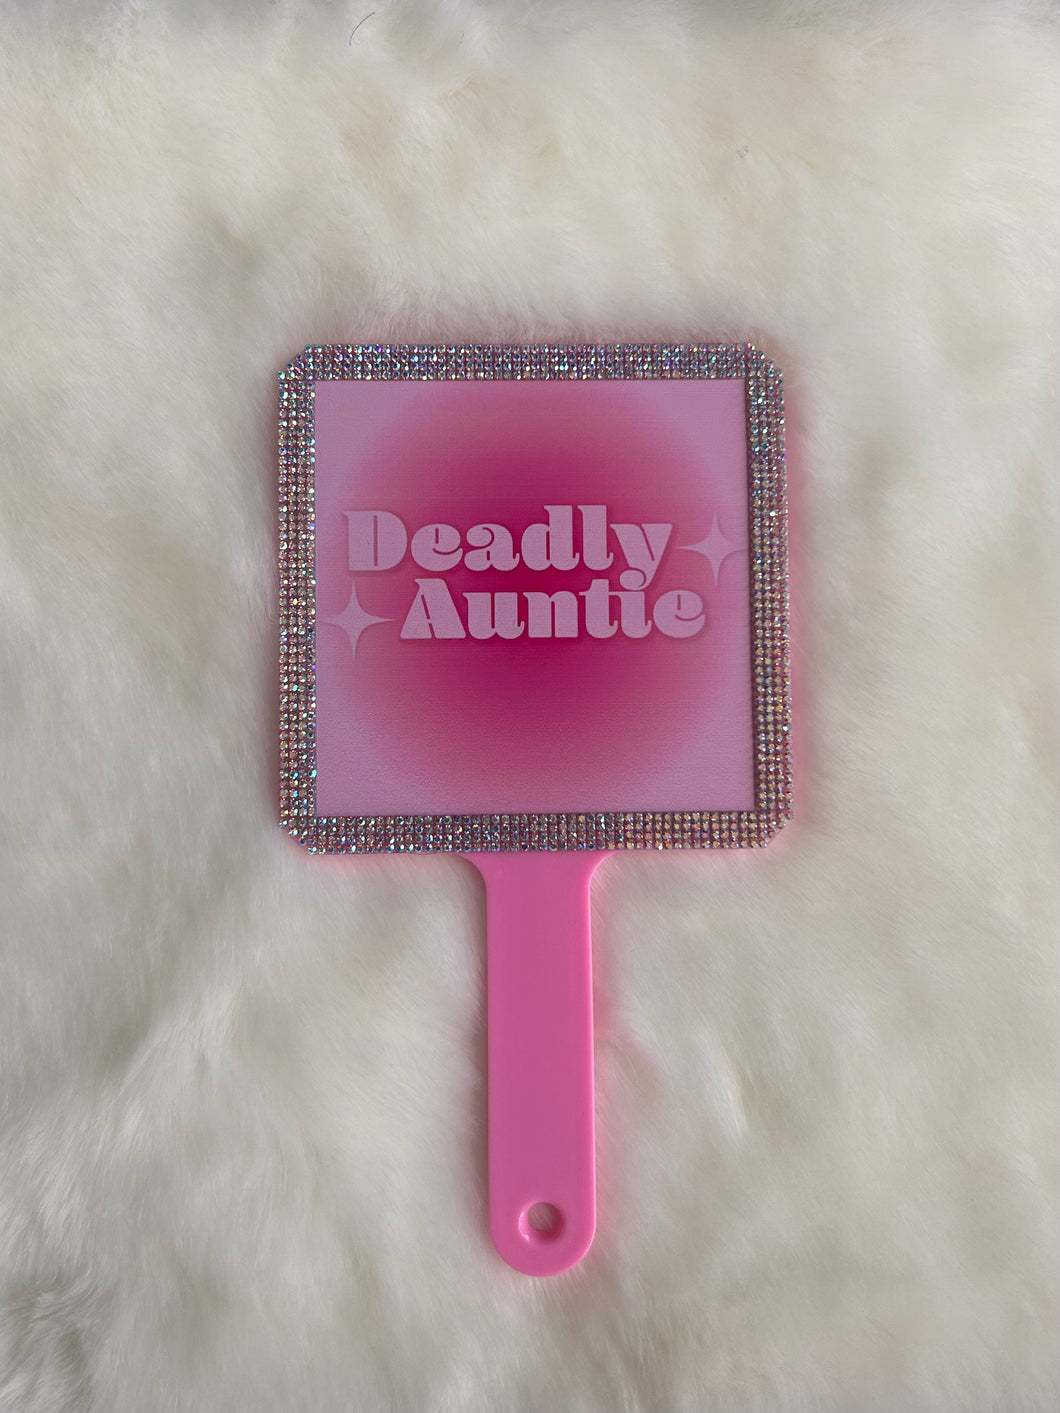 Deadly Auntie Handheld Mirror